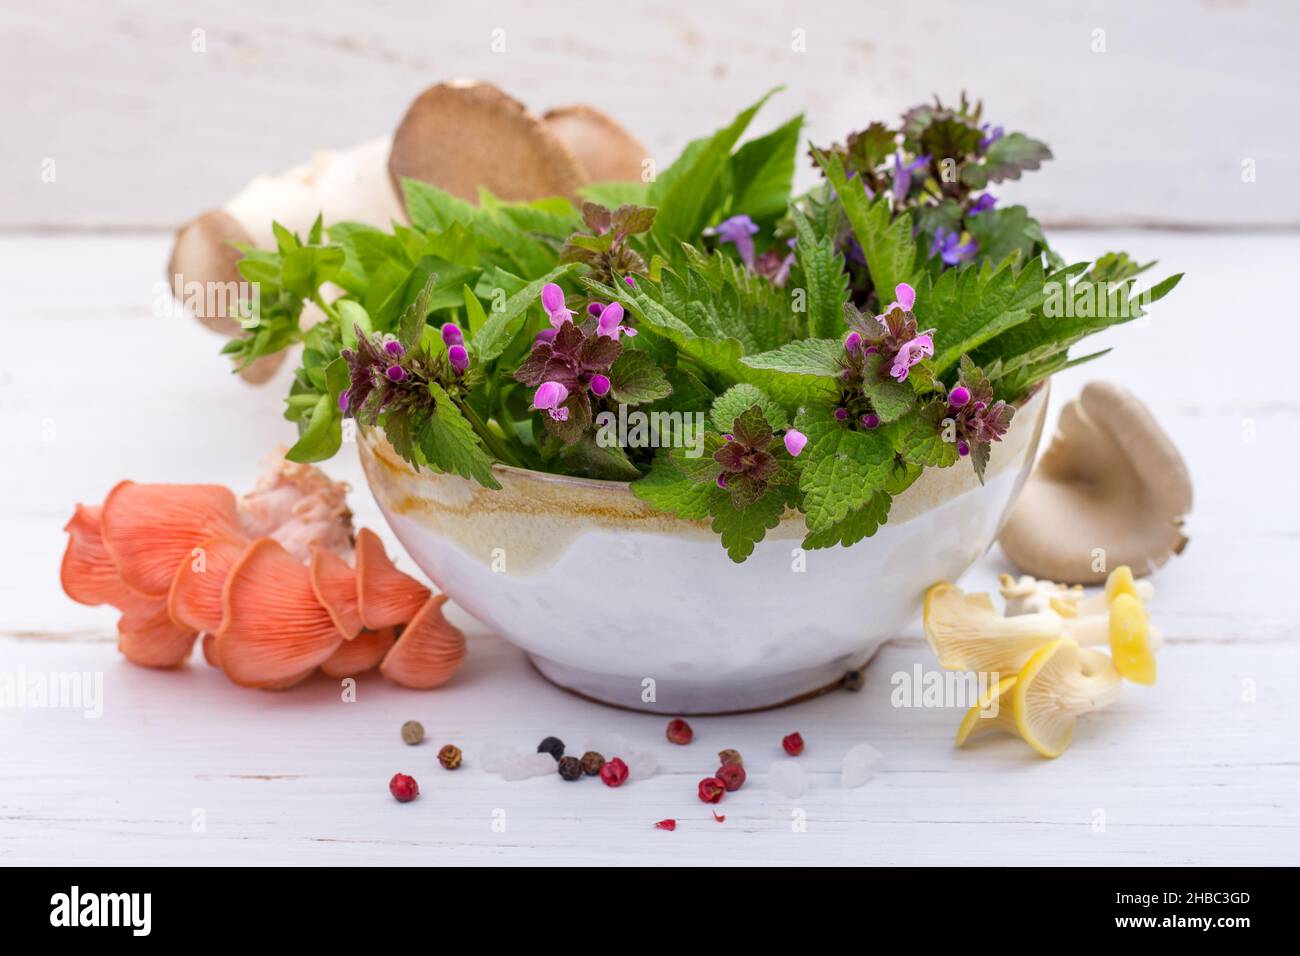 Bowl of fresh wild herbs and mushrooms Stock Photo